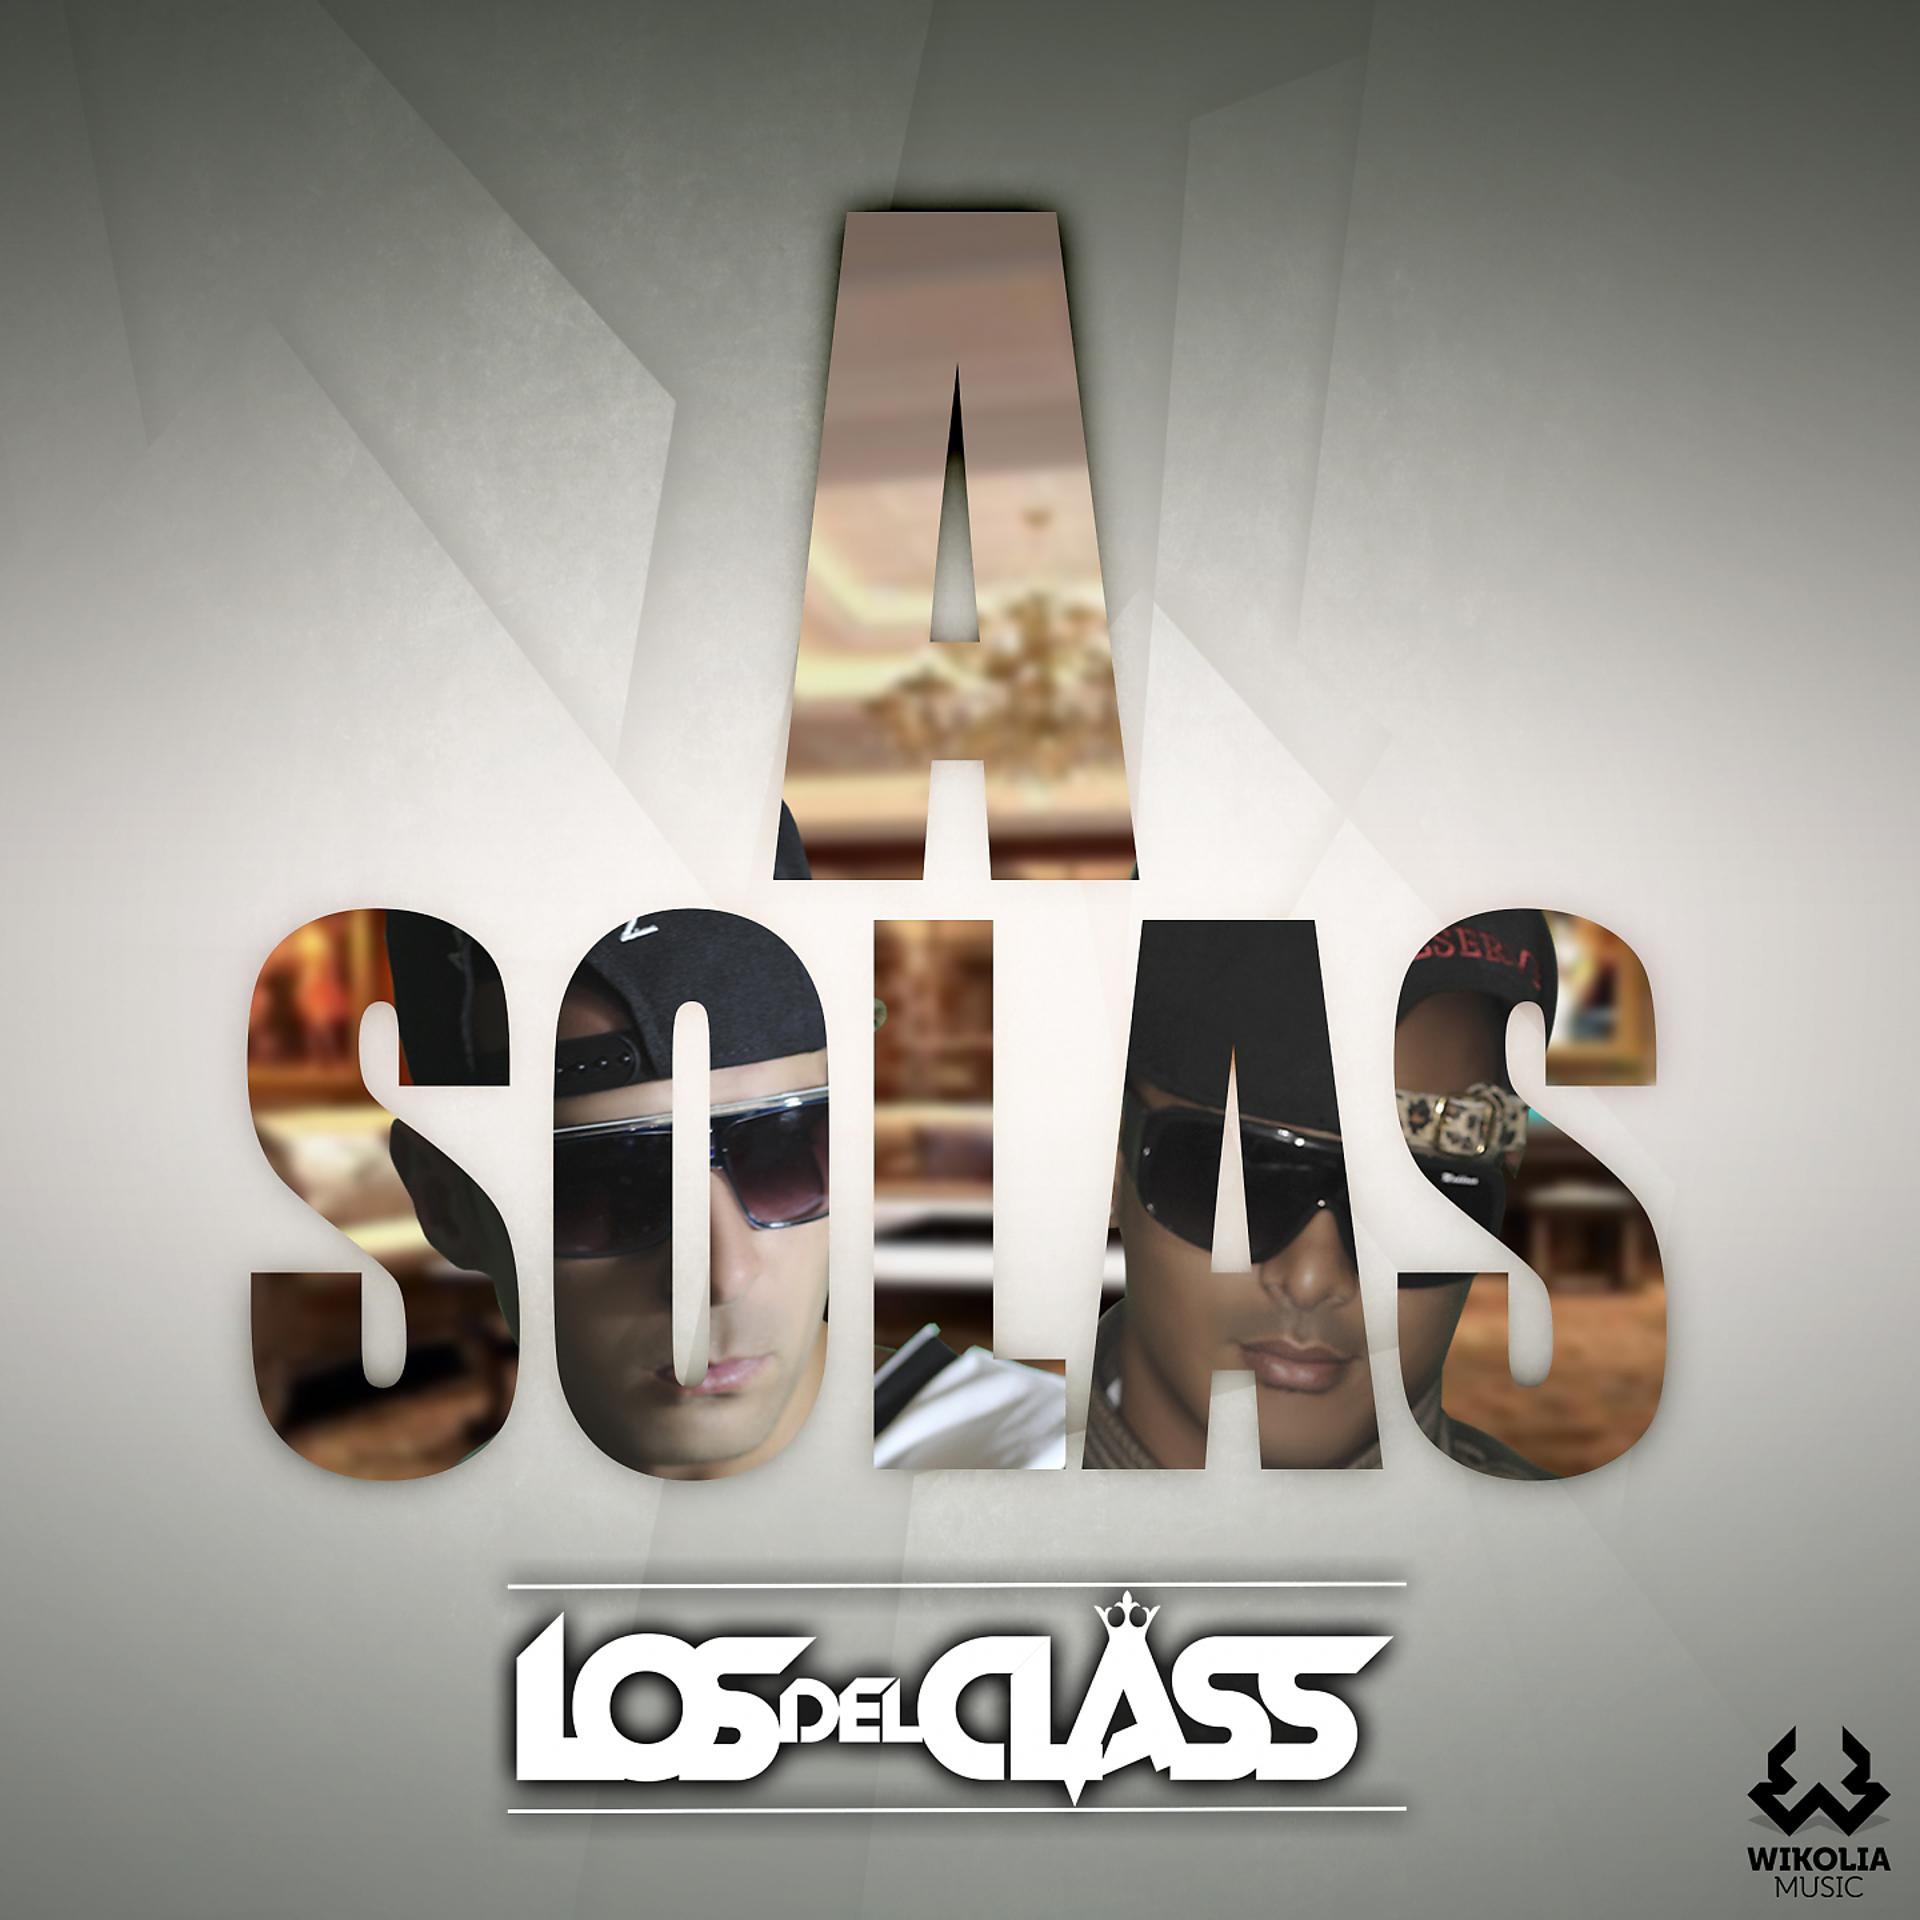 Постер альбома A Solas